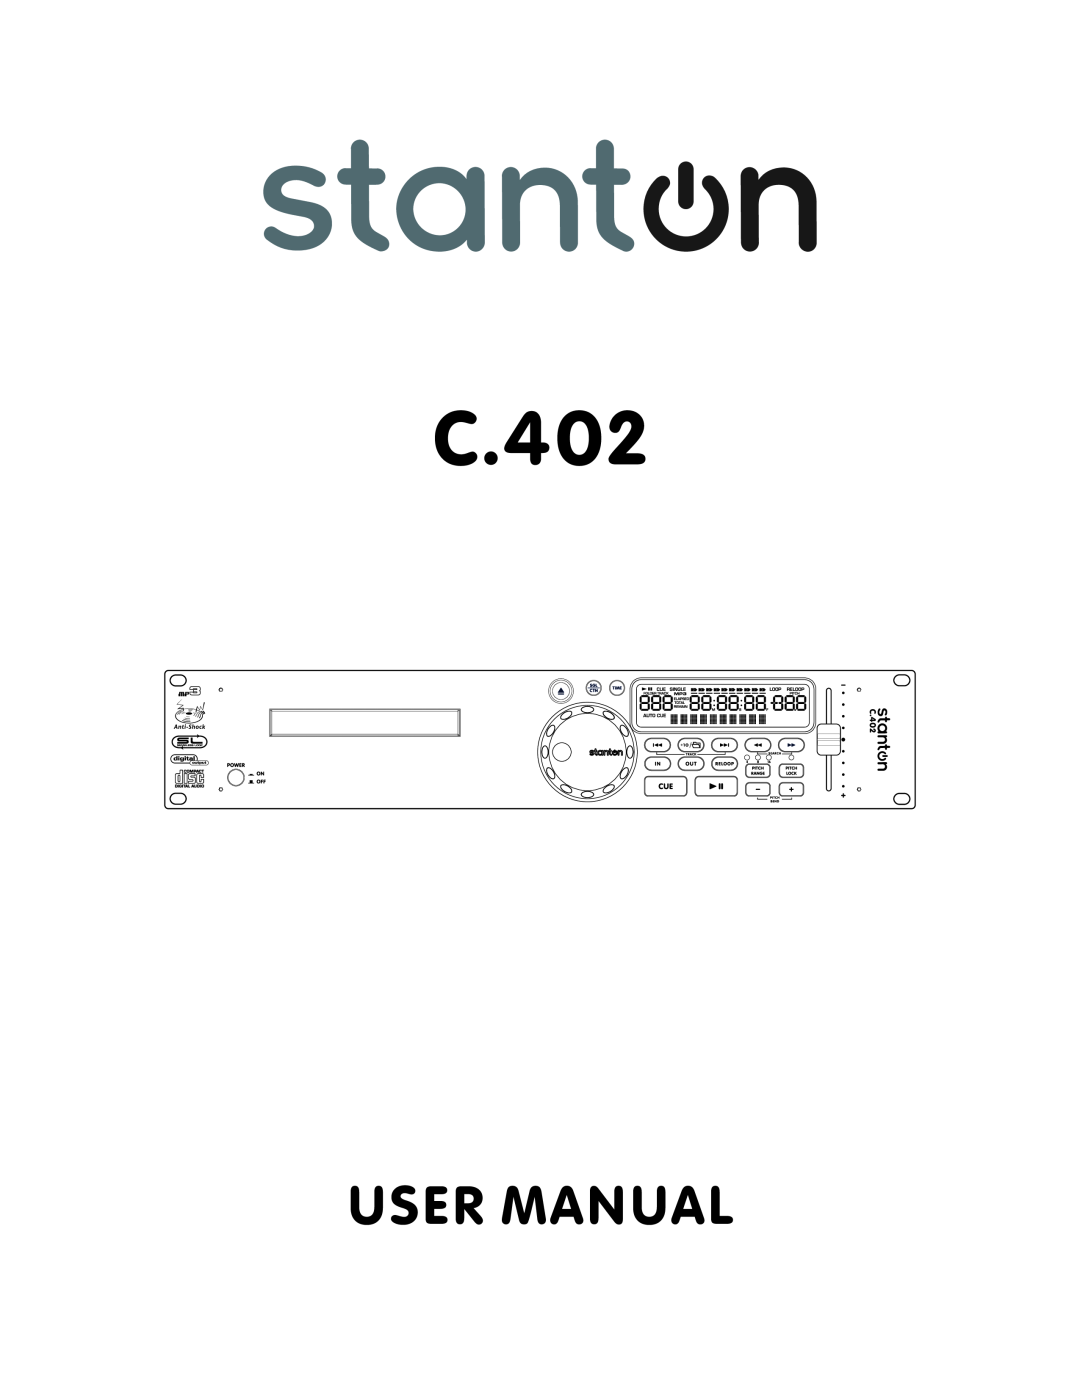 Stanton C.402 user manual 